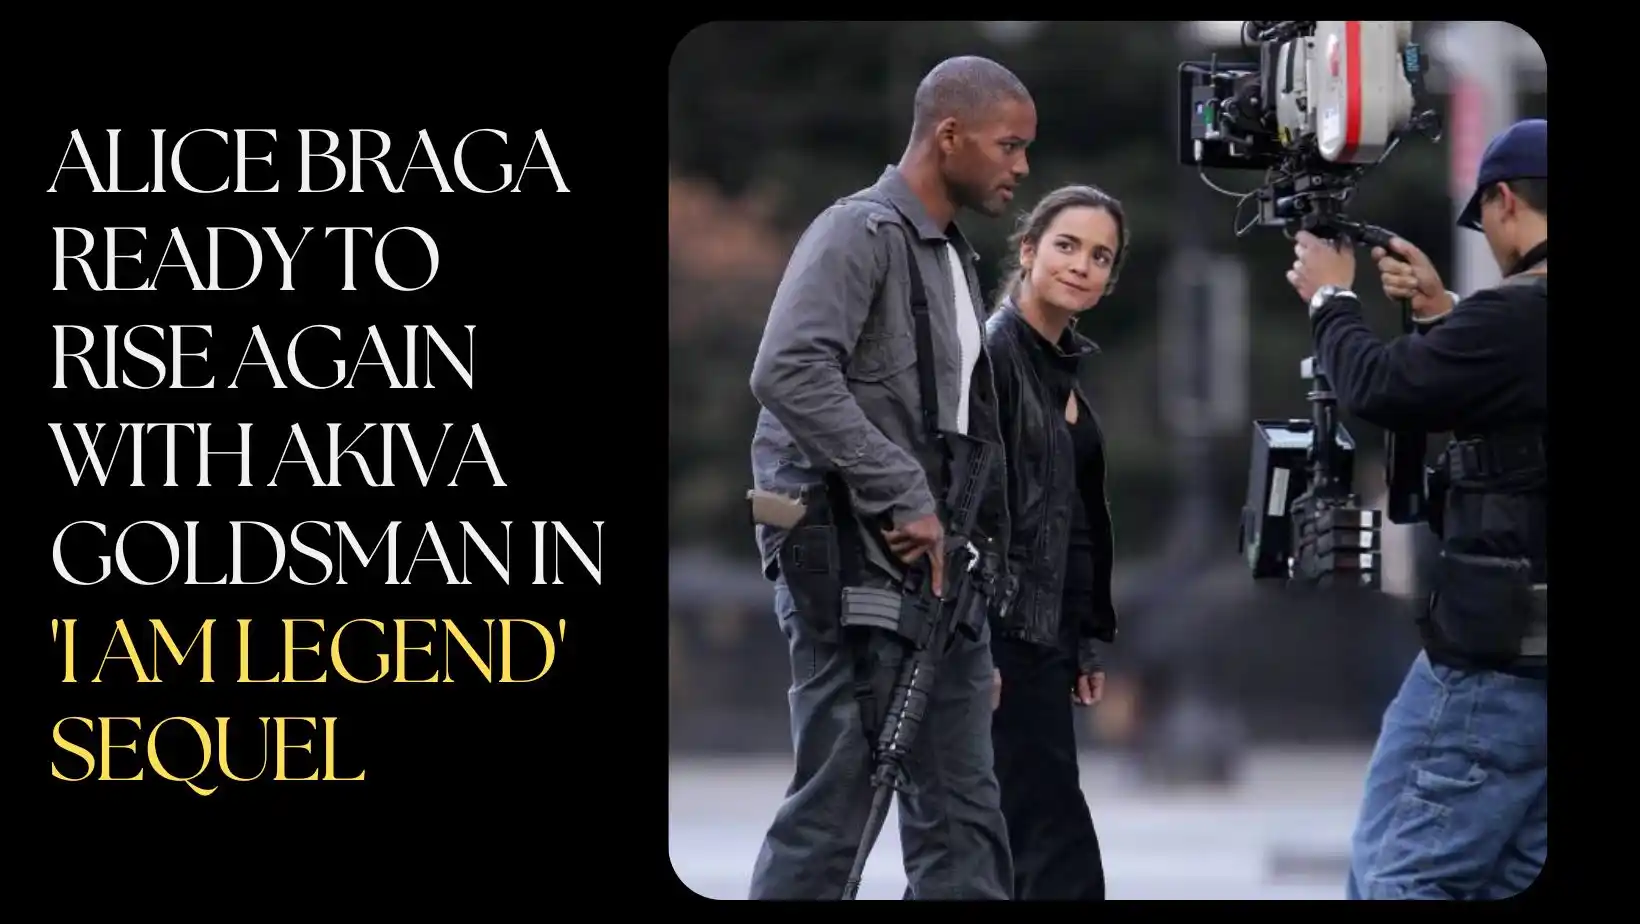 Alice Braga Ready to Rise Again with Akiva Goldsman in 'I Am Legend' Sequel